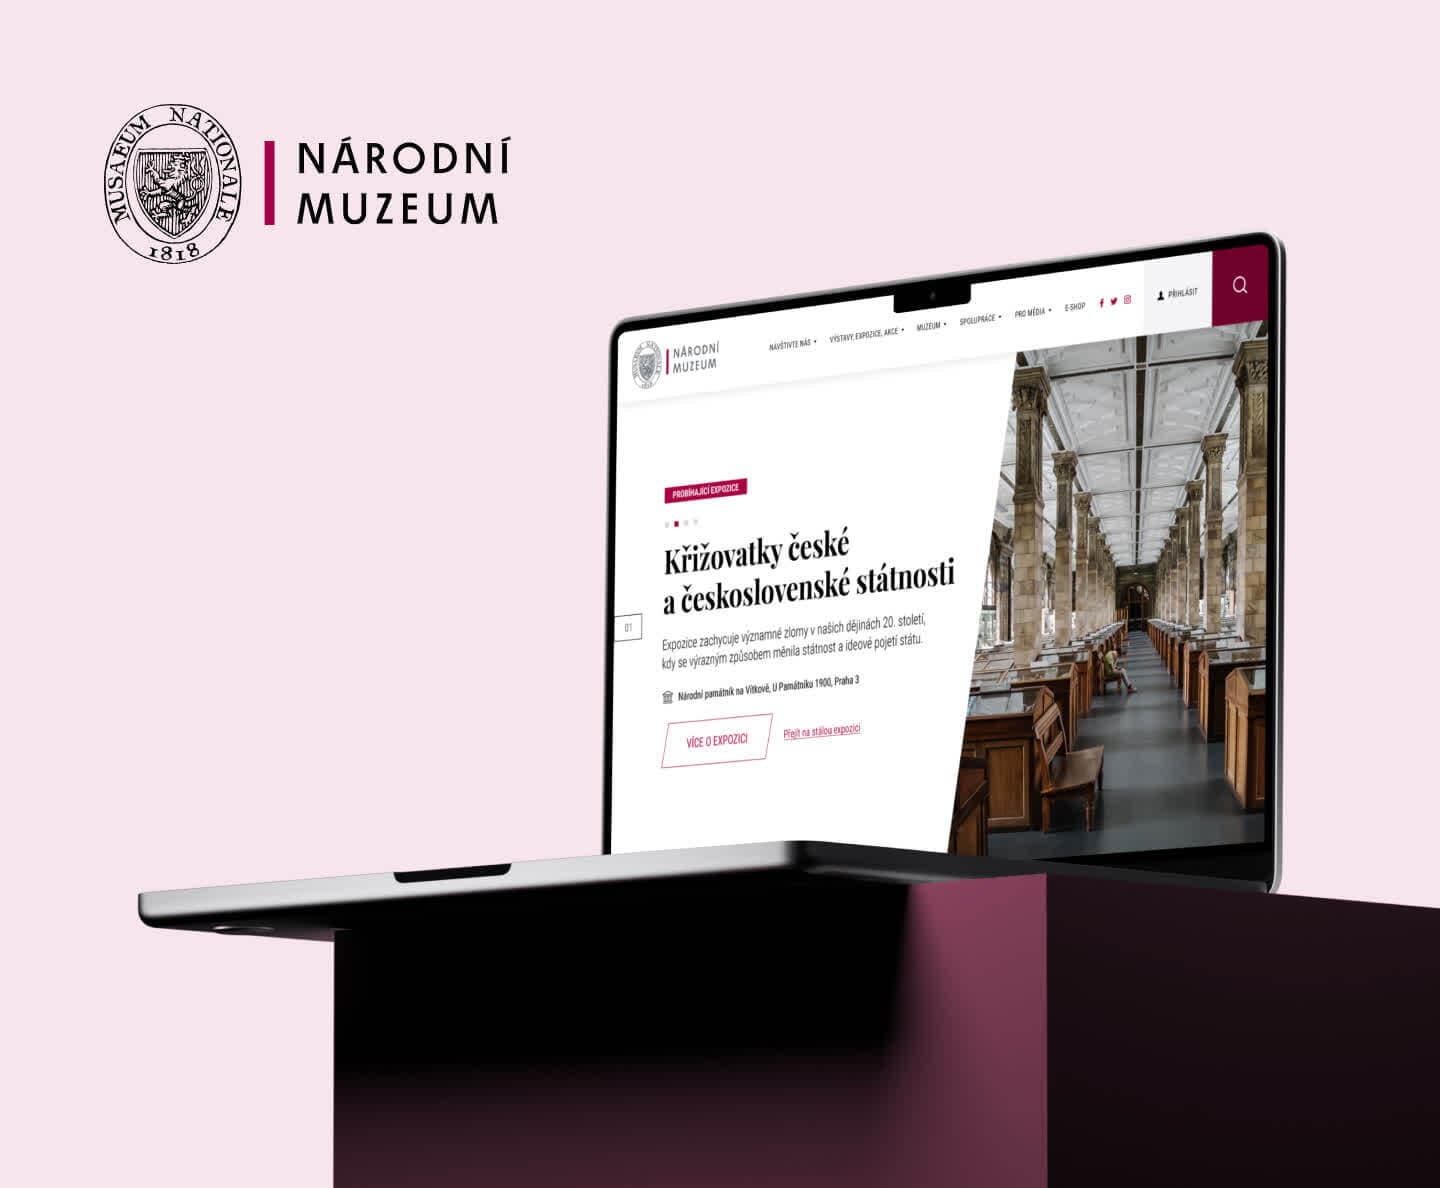 New National Museum website